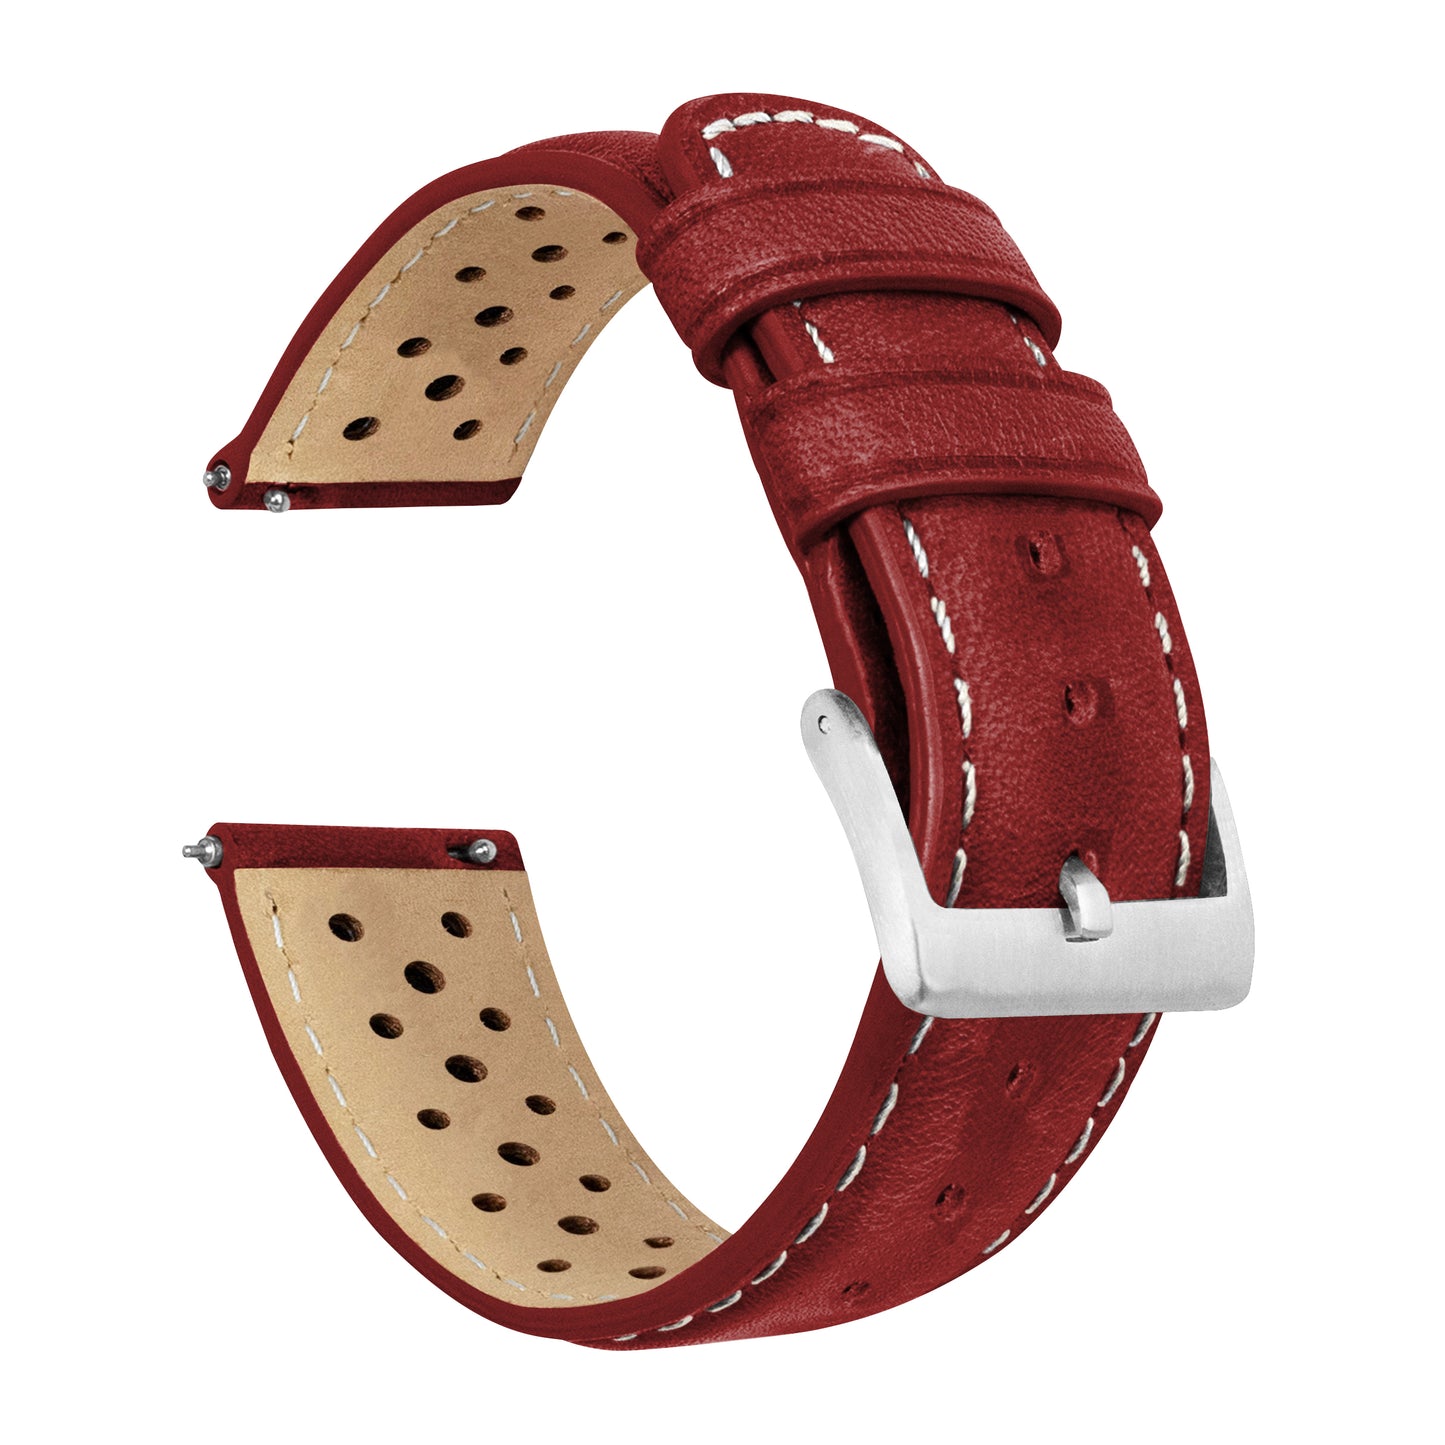 Samsung Galaxy Watch3 Racing Horween Leather Crimson Red Linen Stitch Watch Band